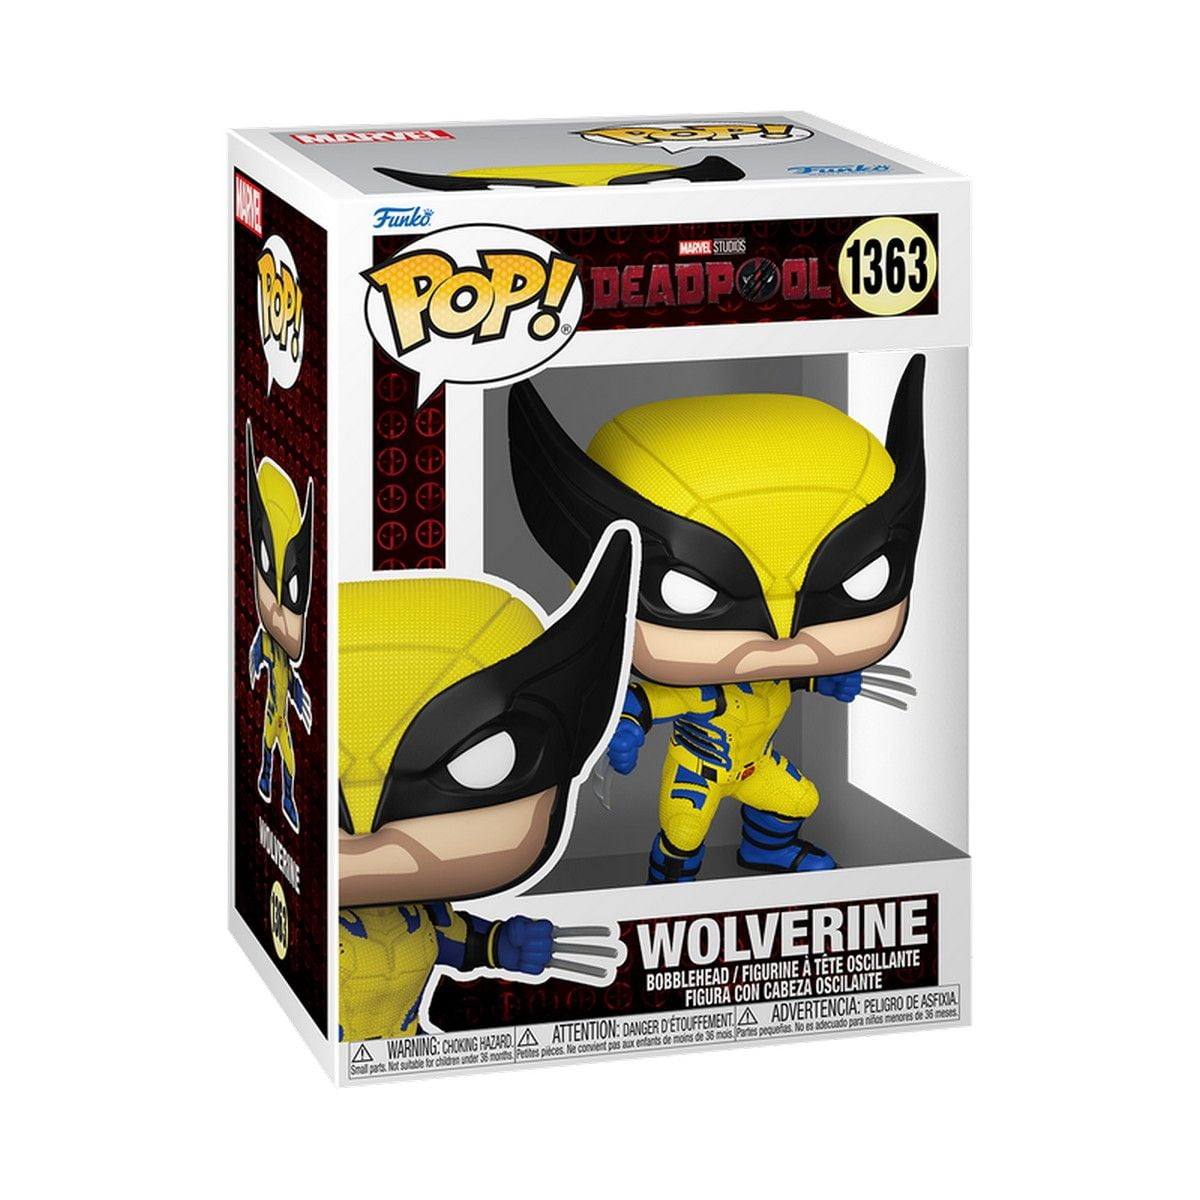 Wolverine - Deadpool 3 - Funko POP! Marvel (1363)